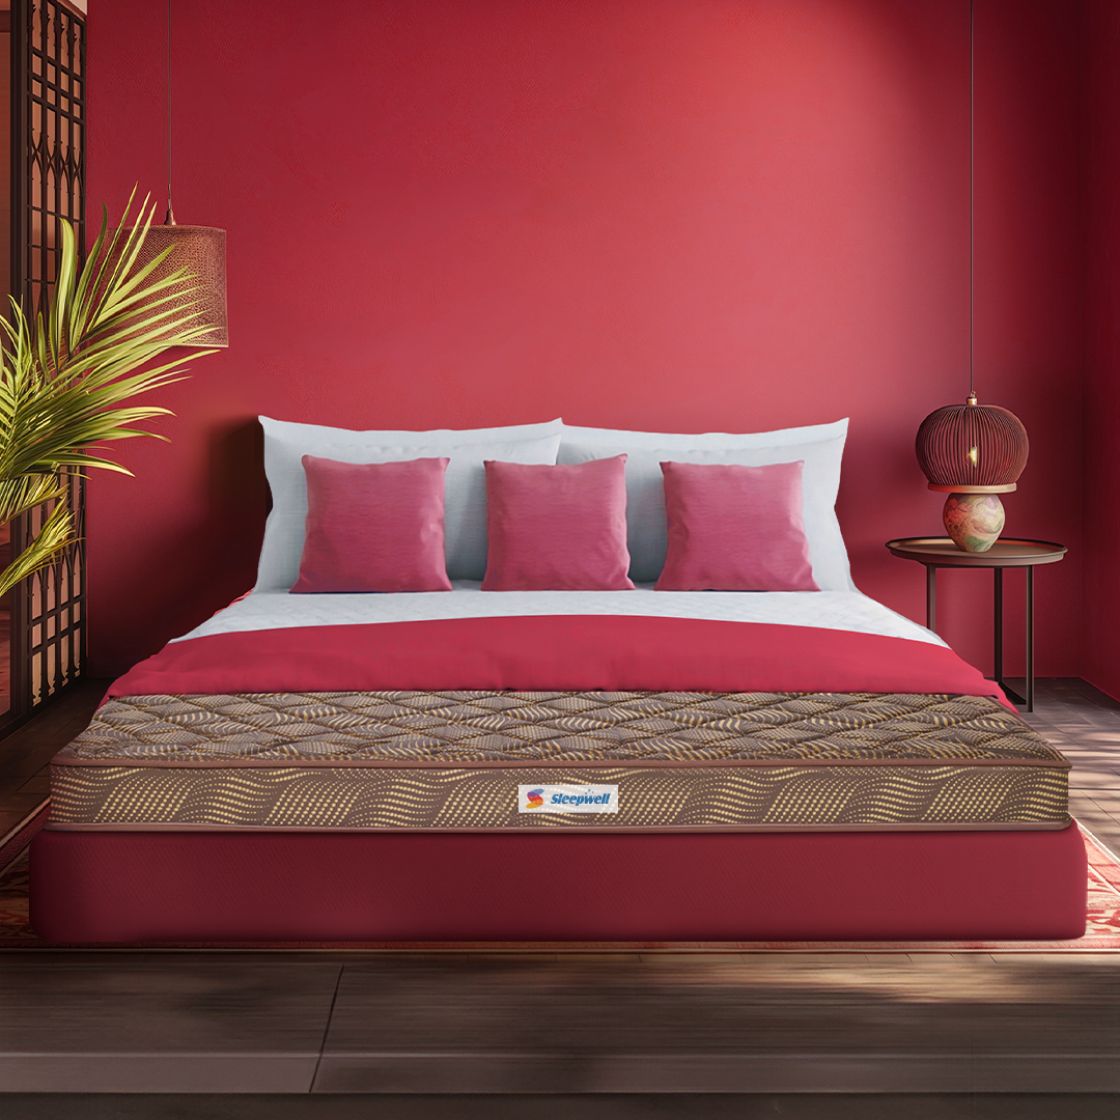 Sleepwell  Champ-Superior PU Foam | 4-inch Single Bed Size | Medium Firm | Anti Sag Tech Mattress (Brown, 75x60x4)